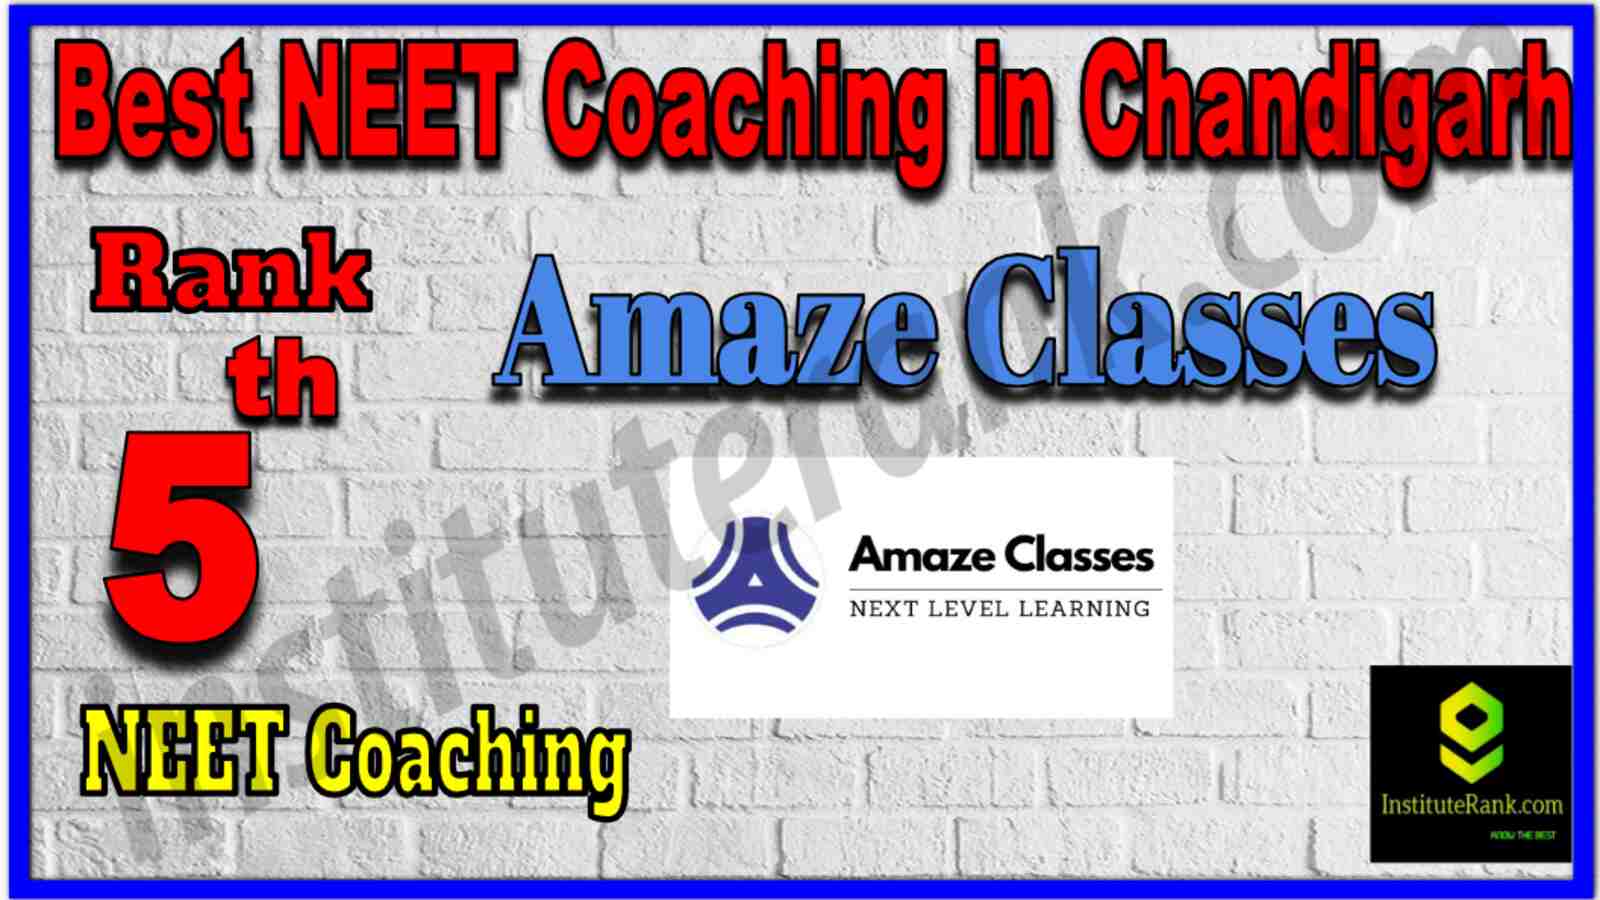 Rank 5 Best NEET Coaching in Chandigarh